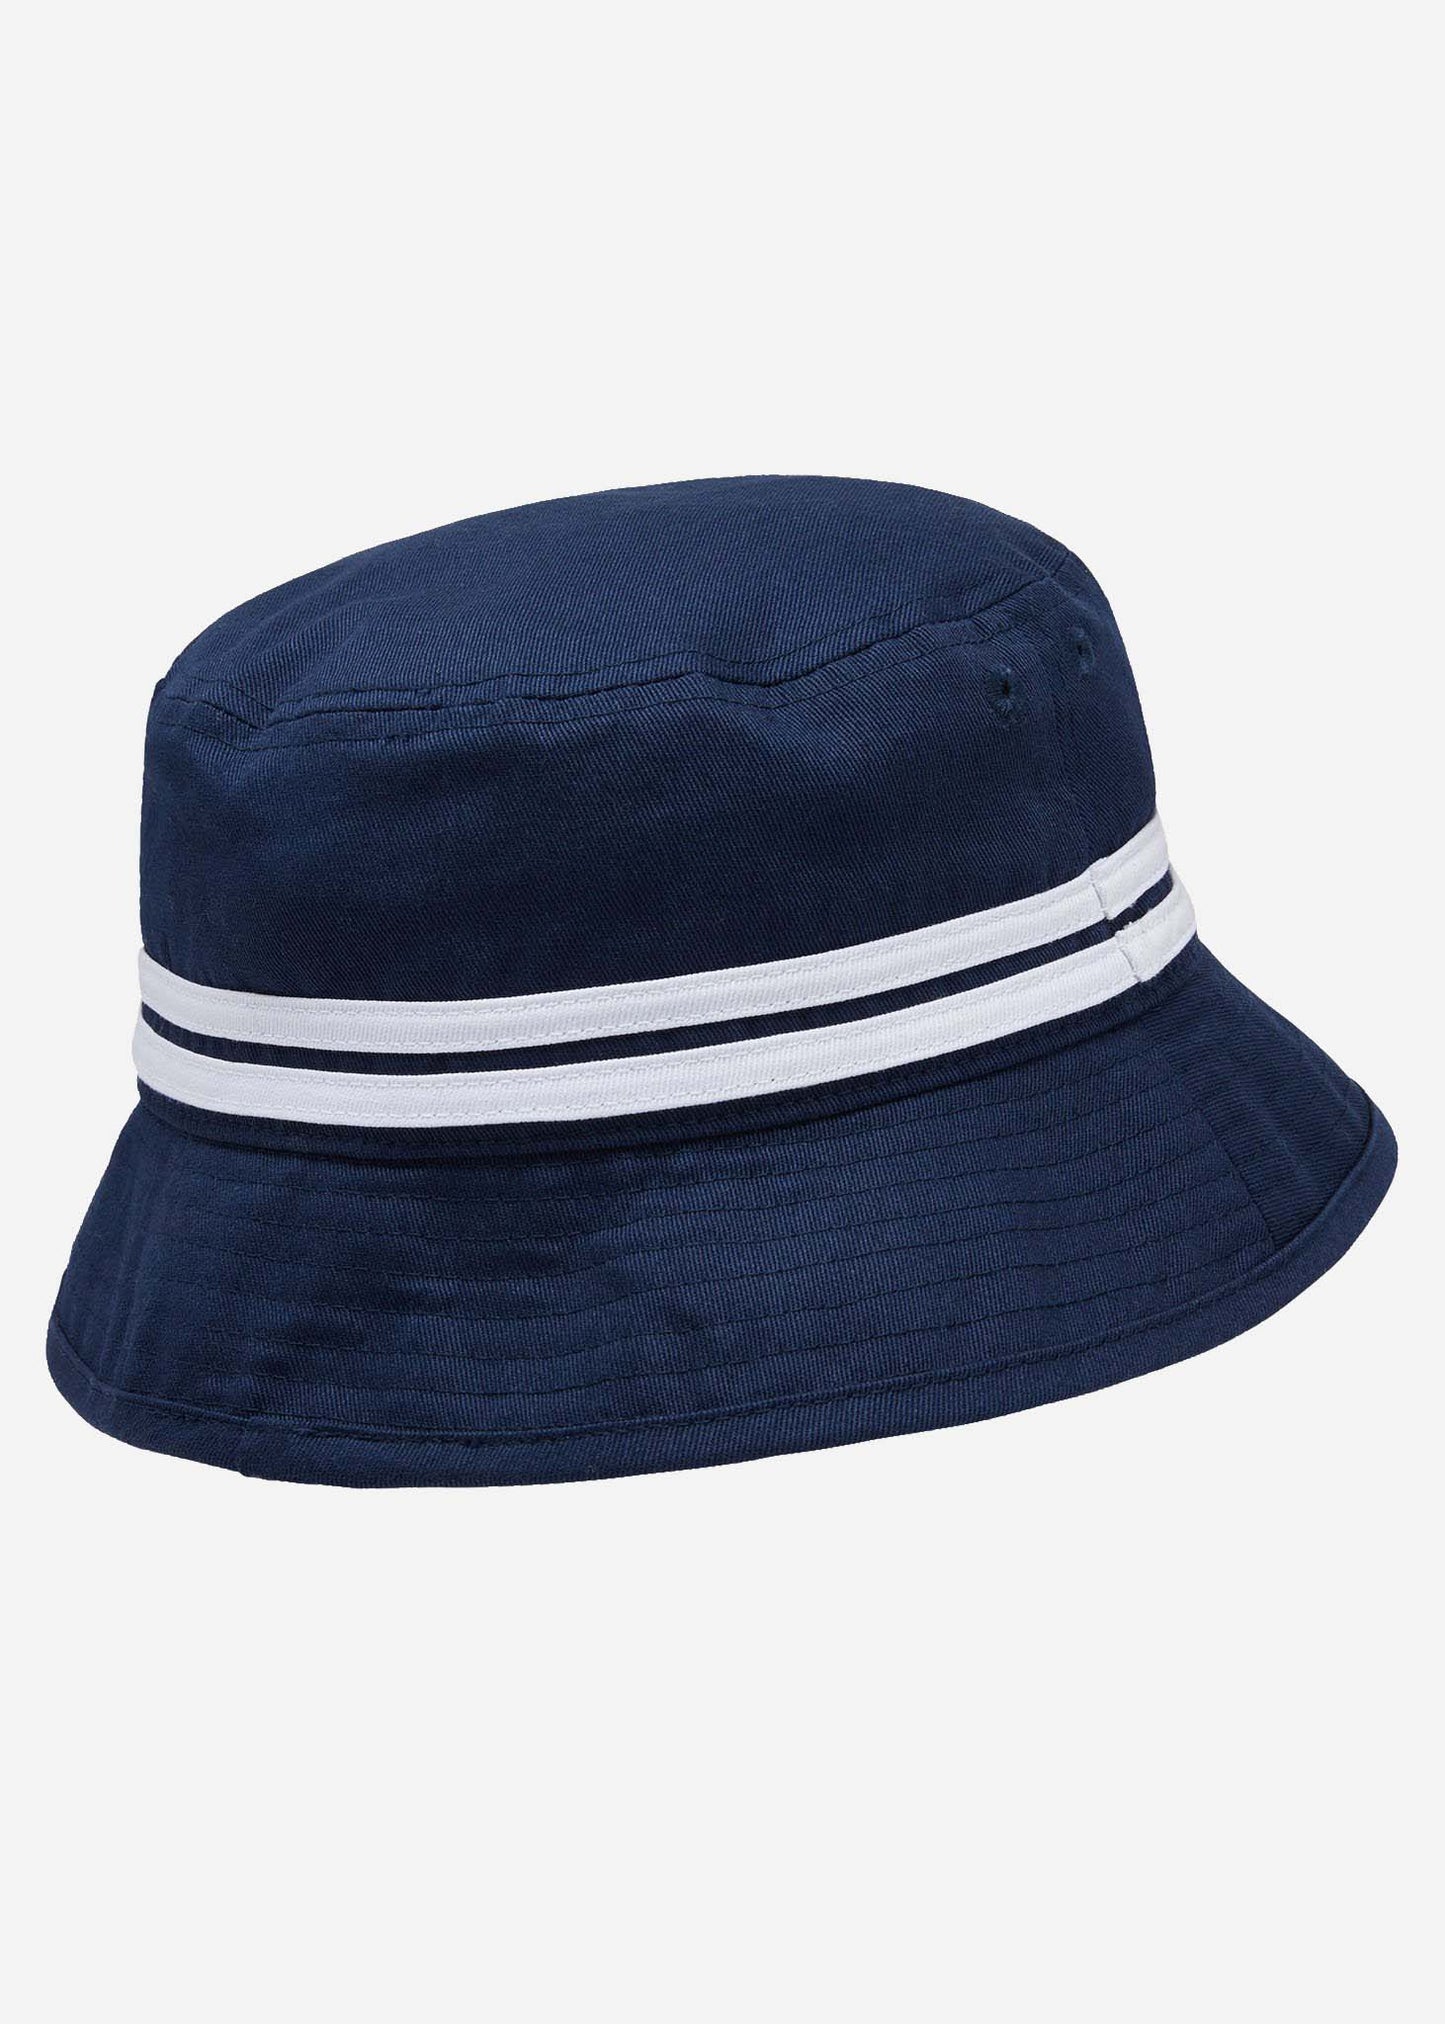 Lorenzo bucket hat - navy